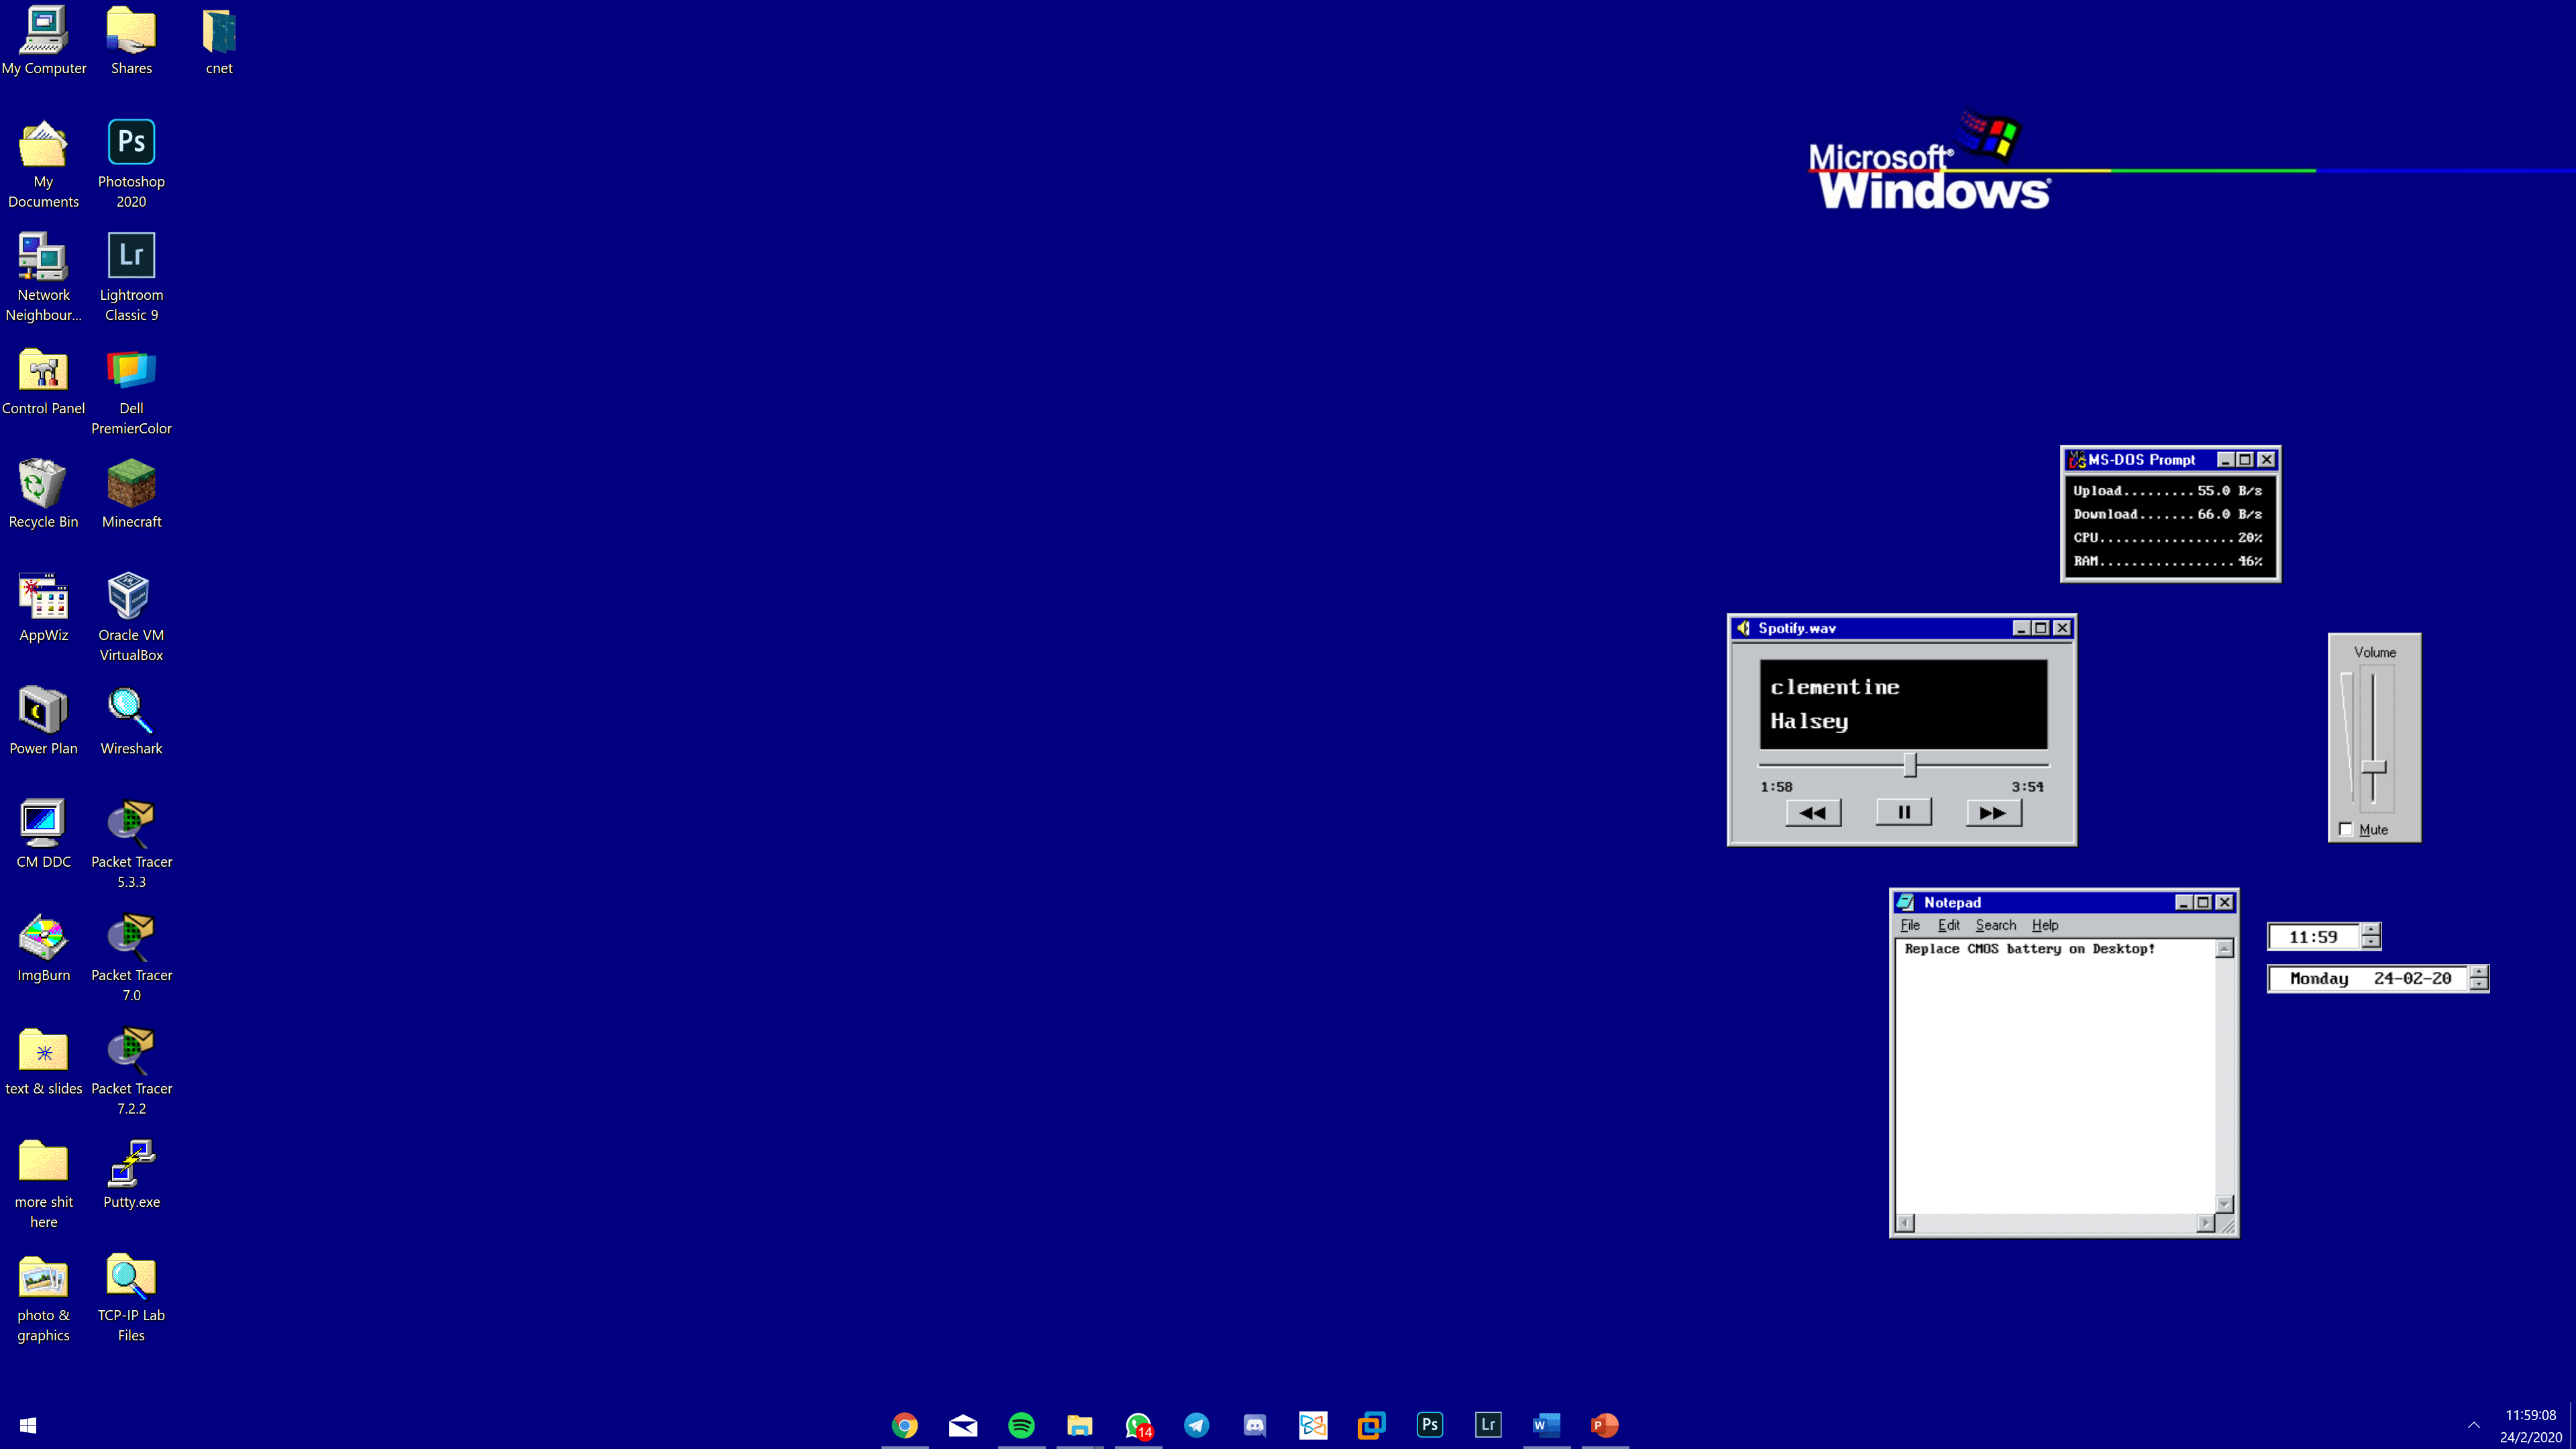 Windows 98 desktop aesthetic on Windows 10 in comments